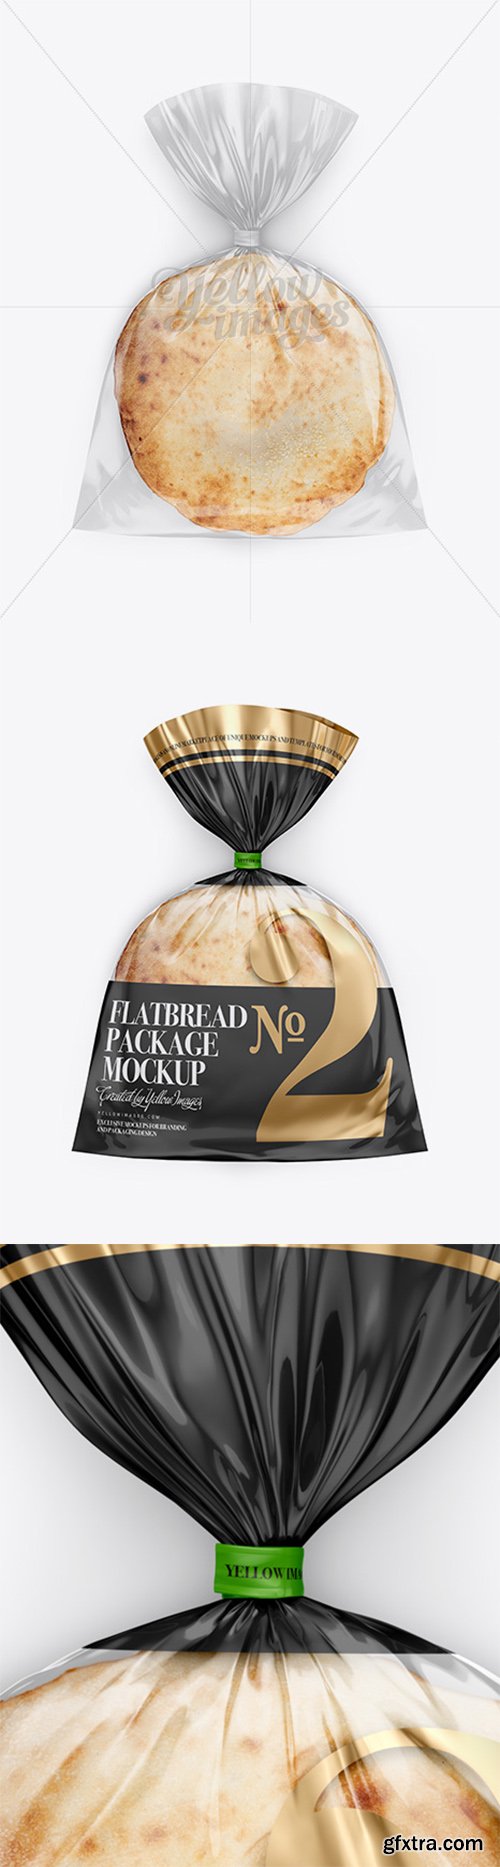 Bag W/ Flatbread Mockup 18141